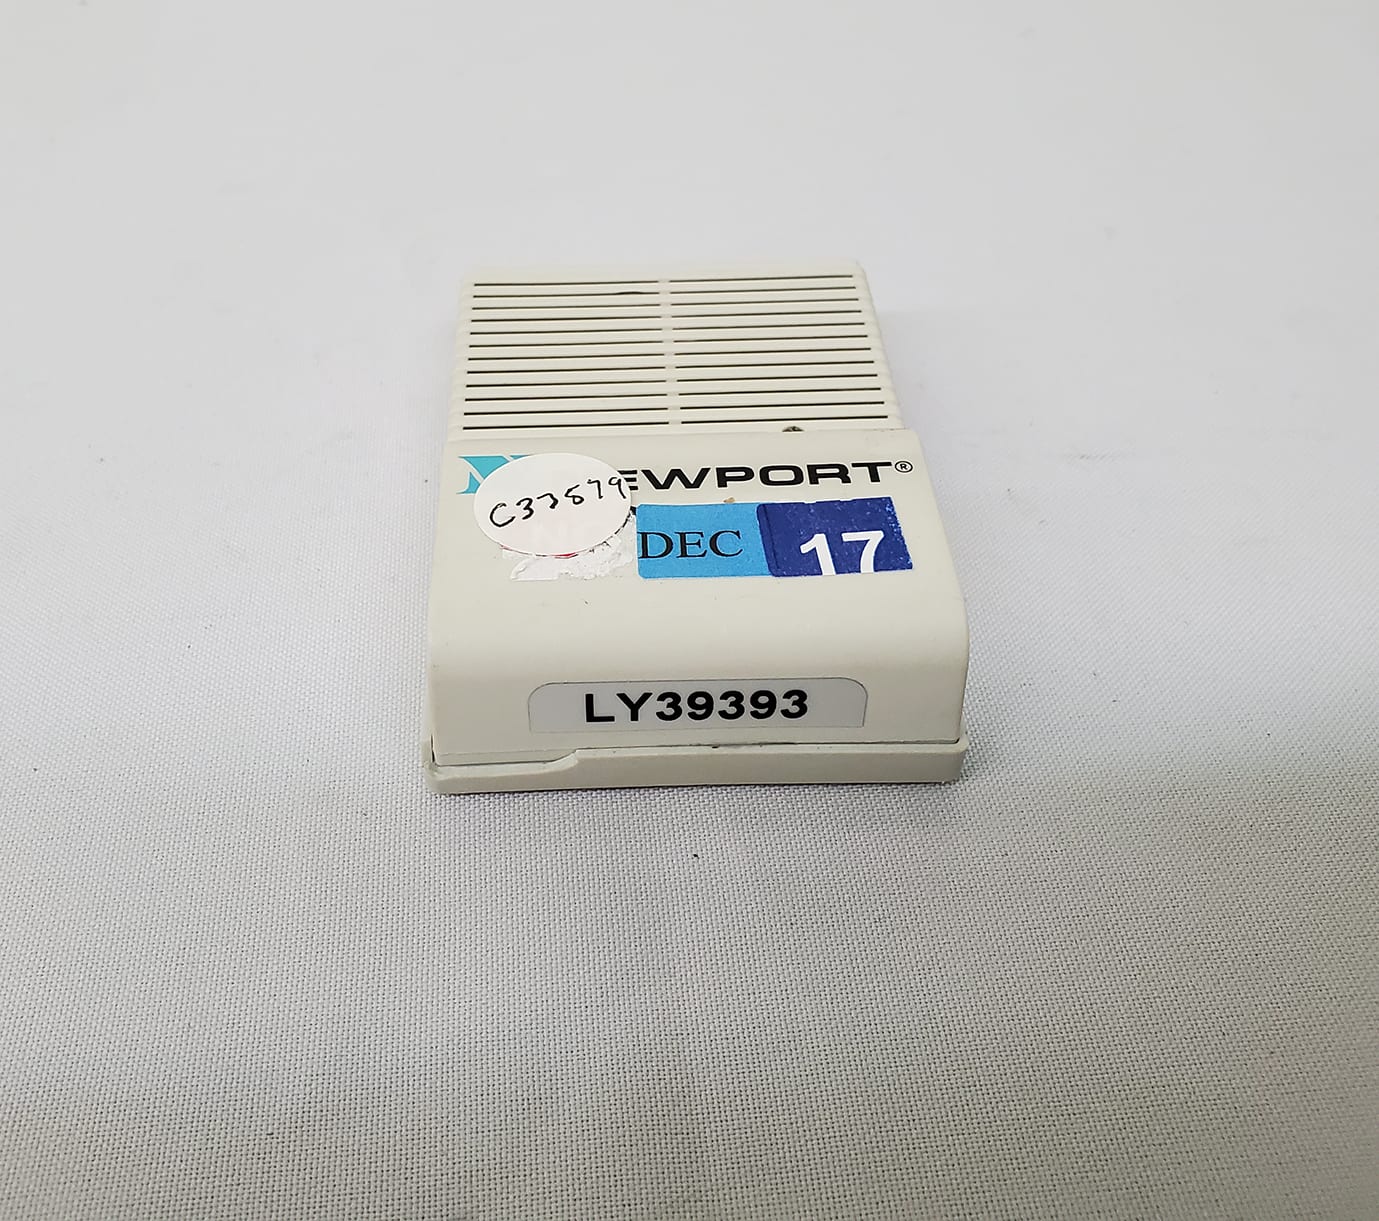 Newport-zED-TH/N-Humidity Sensor-59542 For Sale